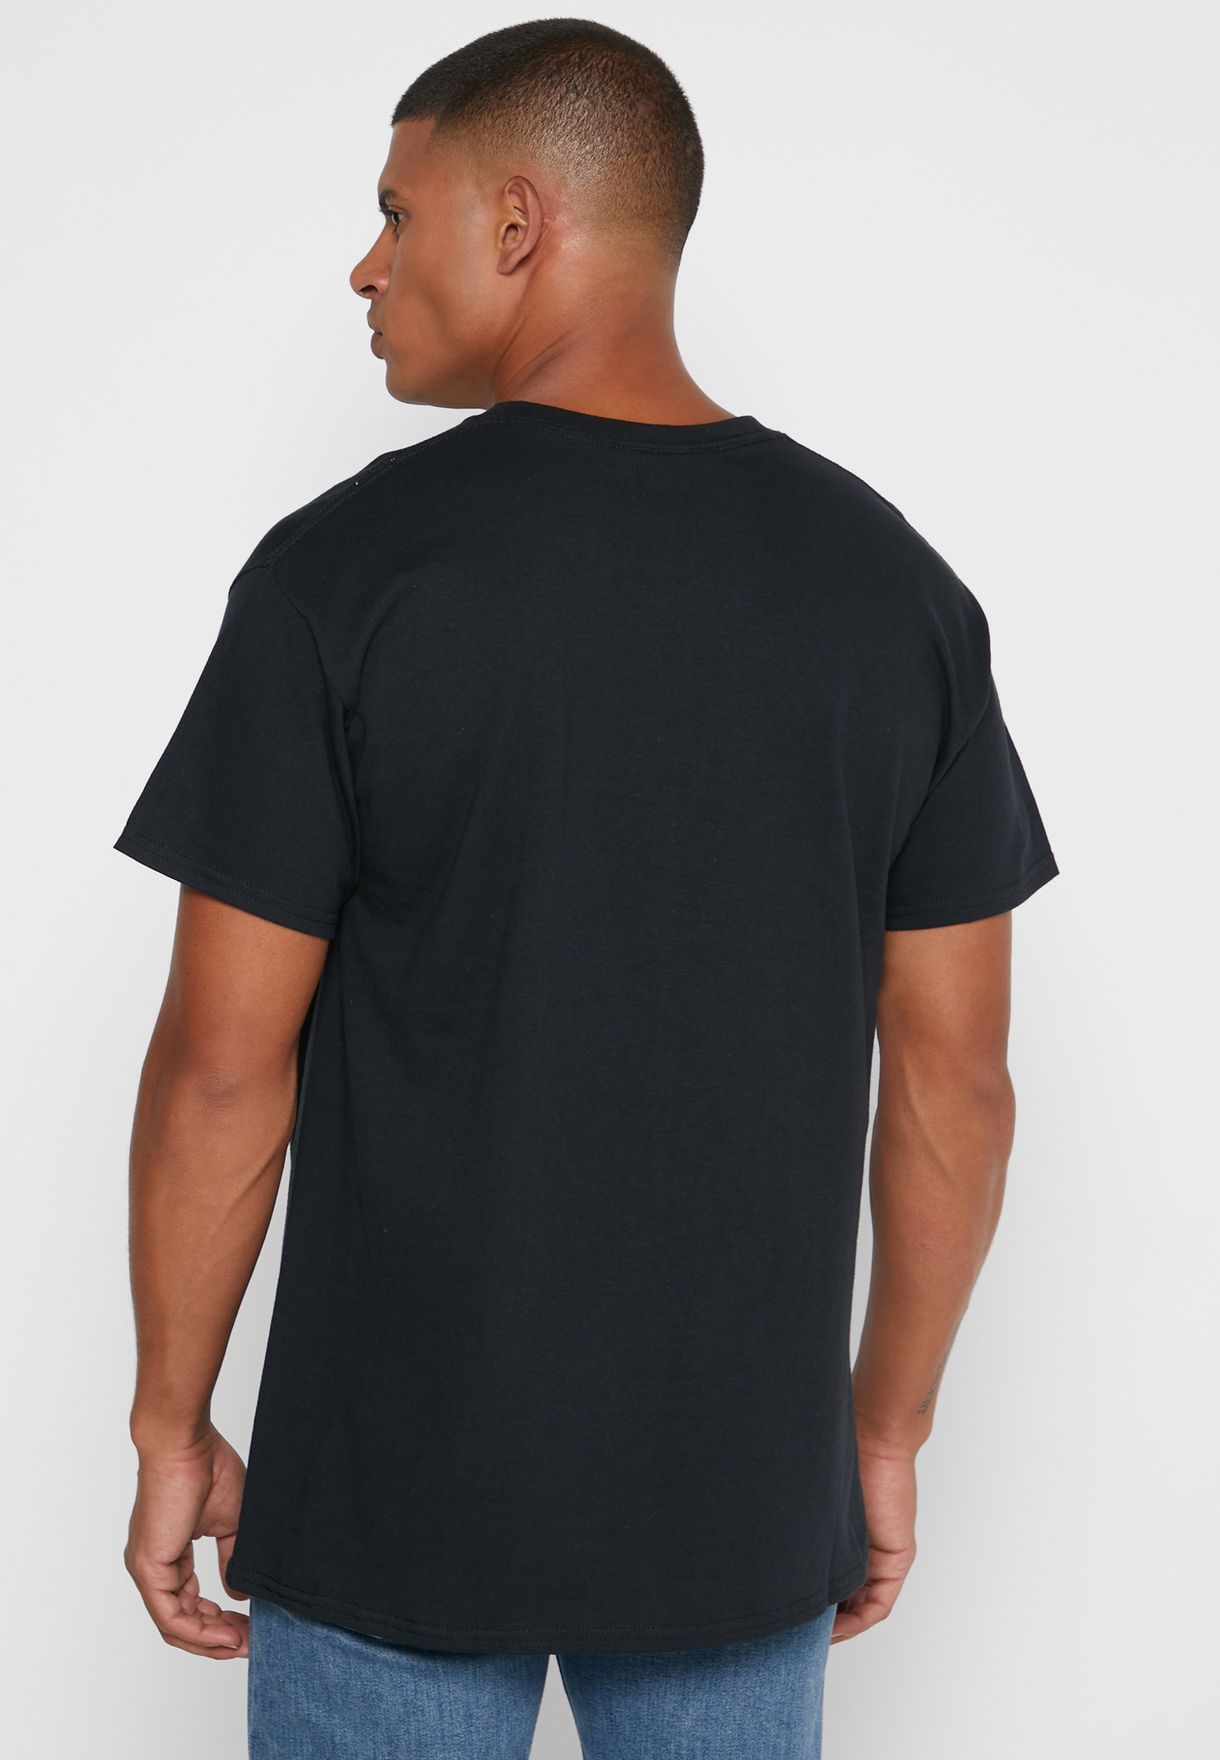 Pentagon Printed T-Shirt